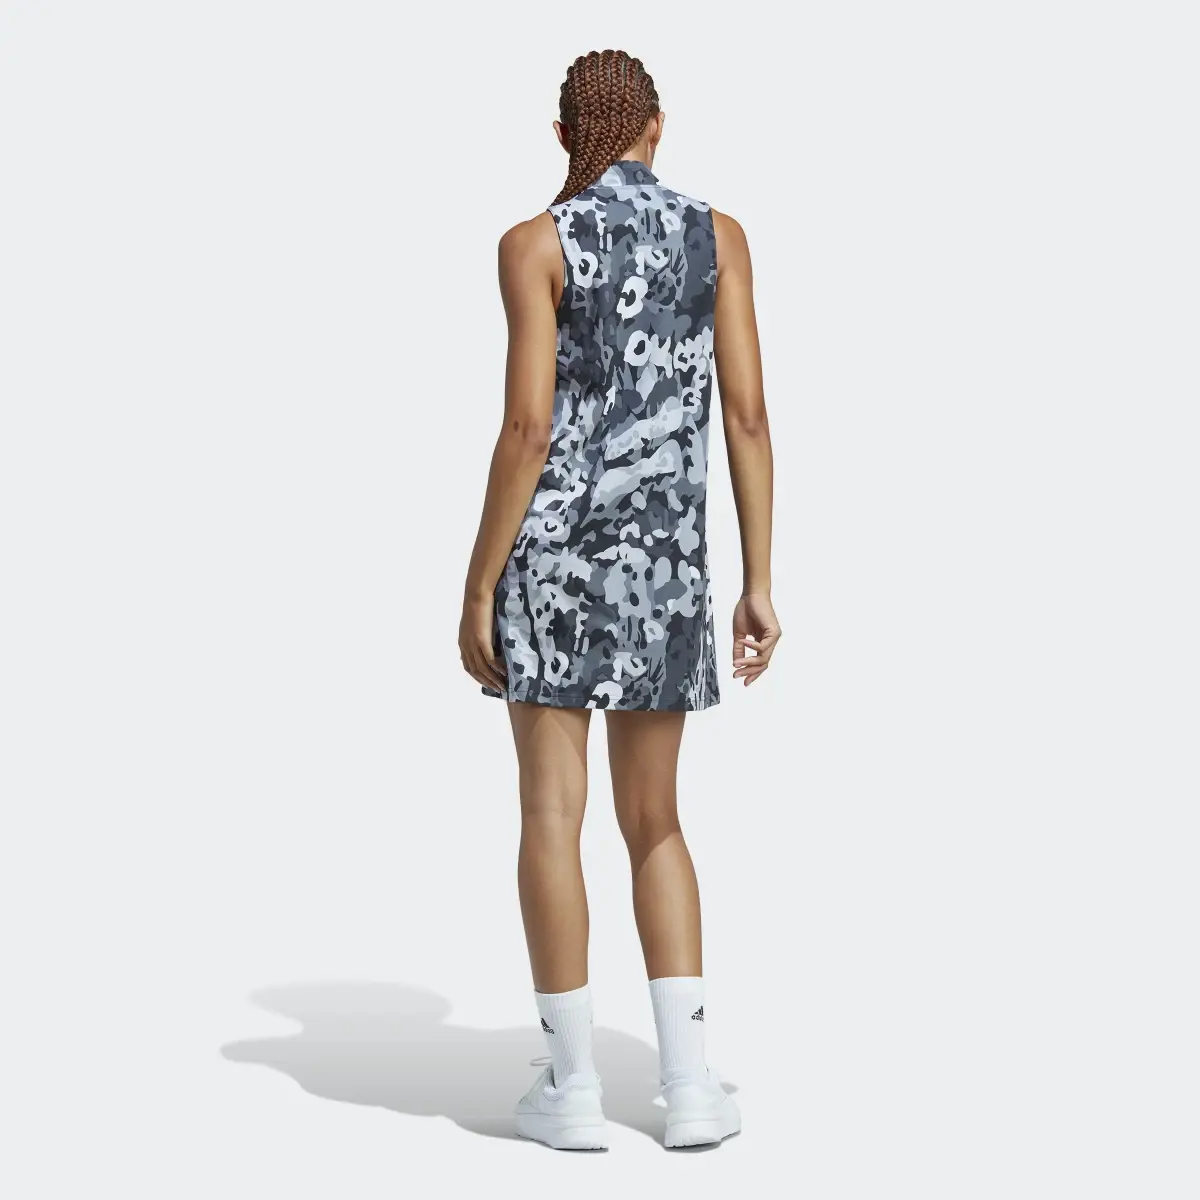 Adidas Graphic Dress. 3